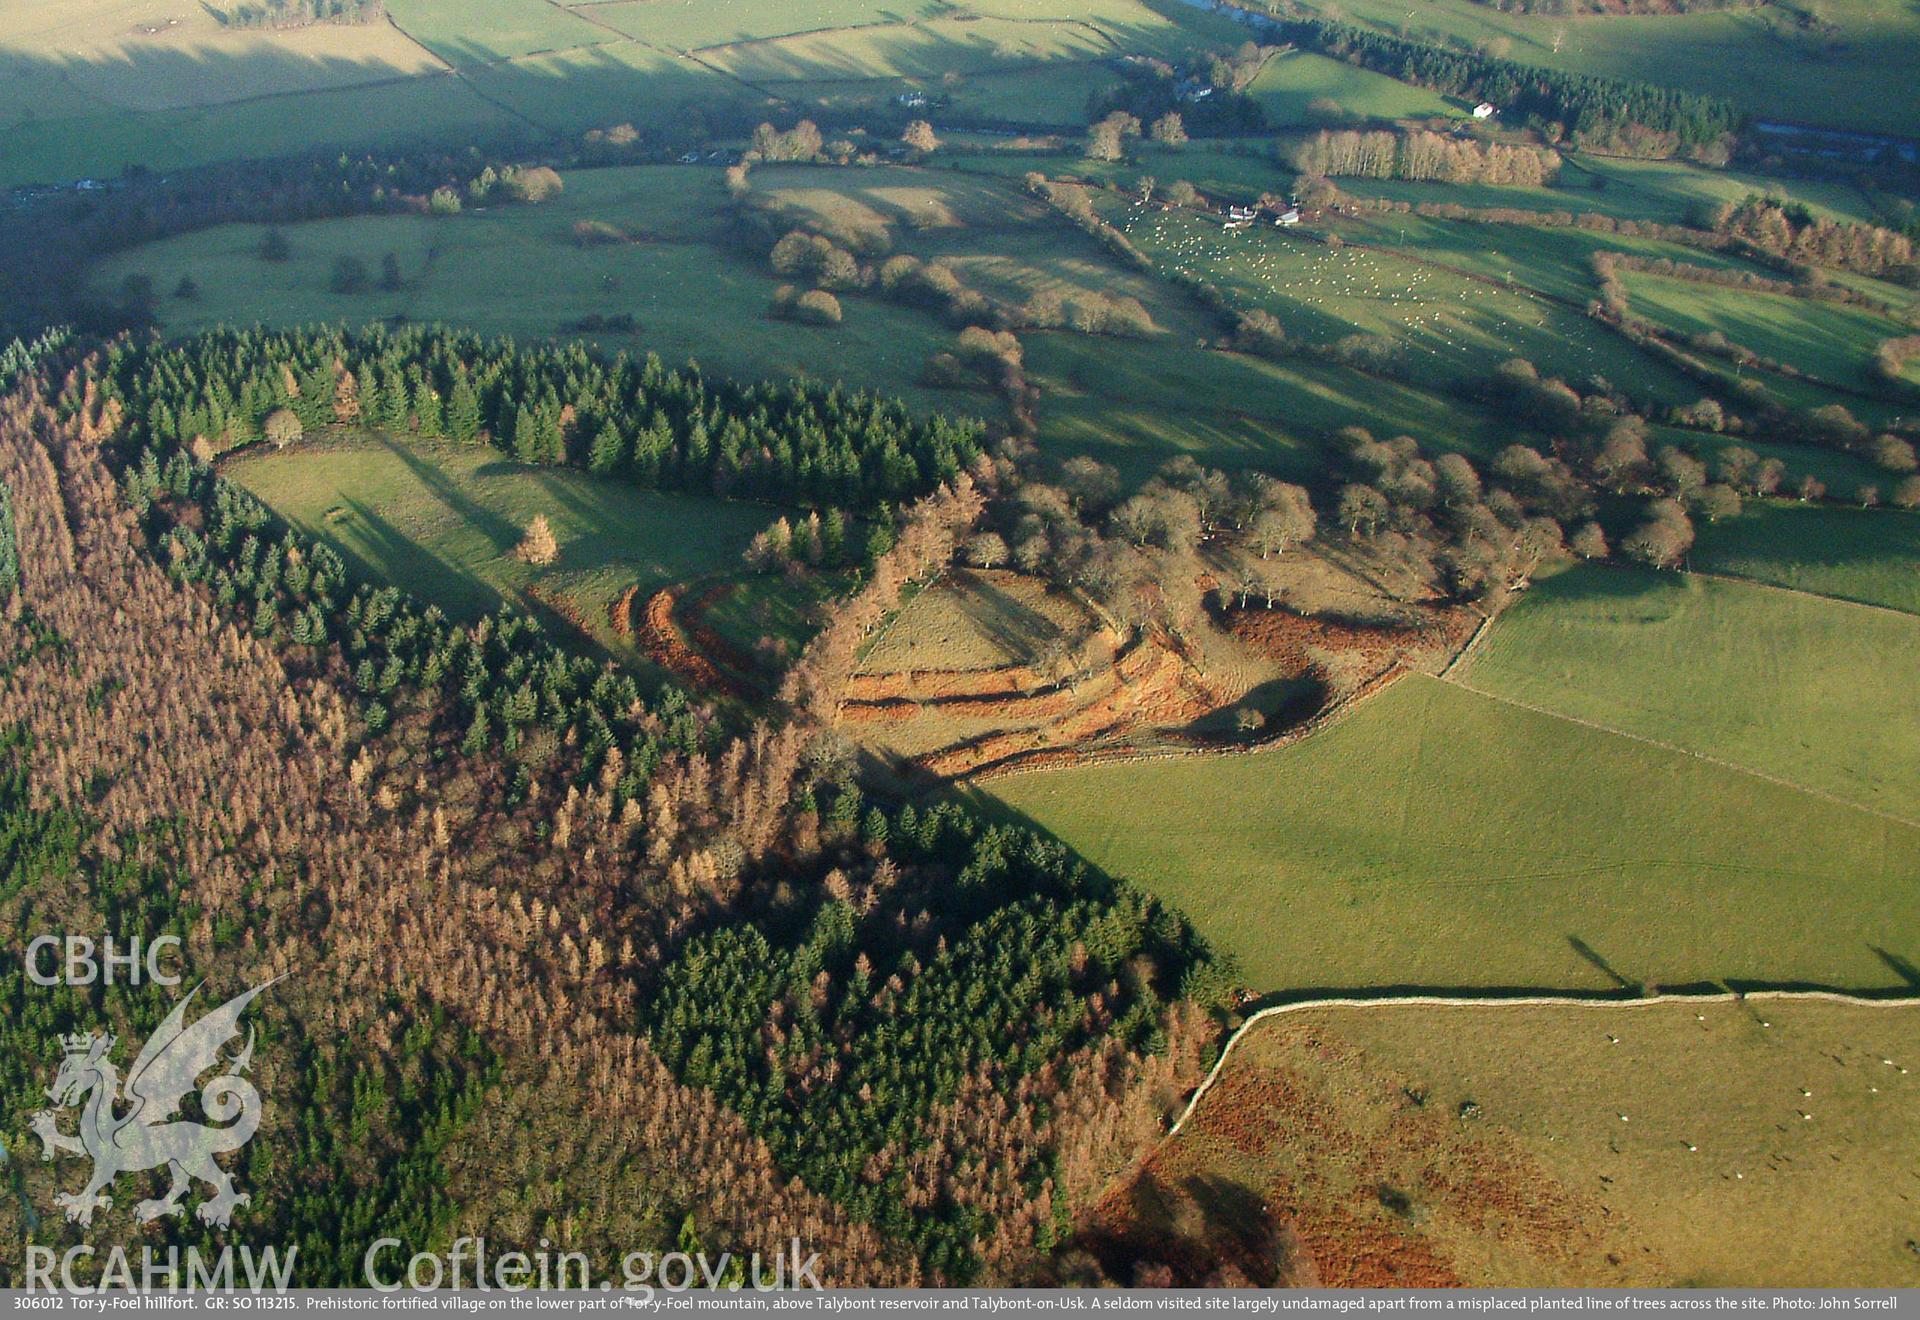 View of Tump Wood Camp, taken by John Sorrell, 2005.